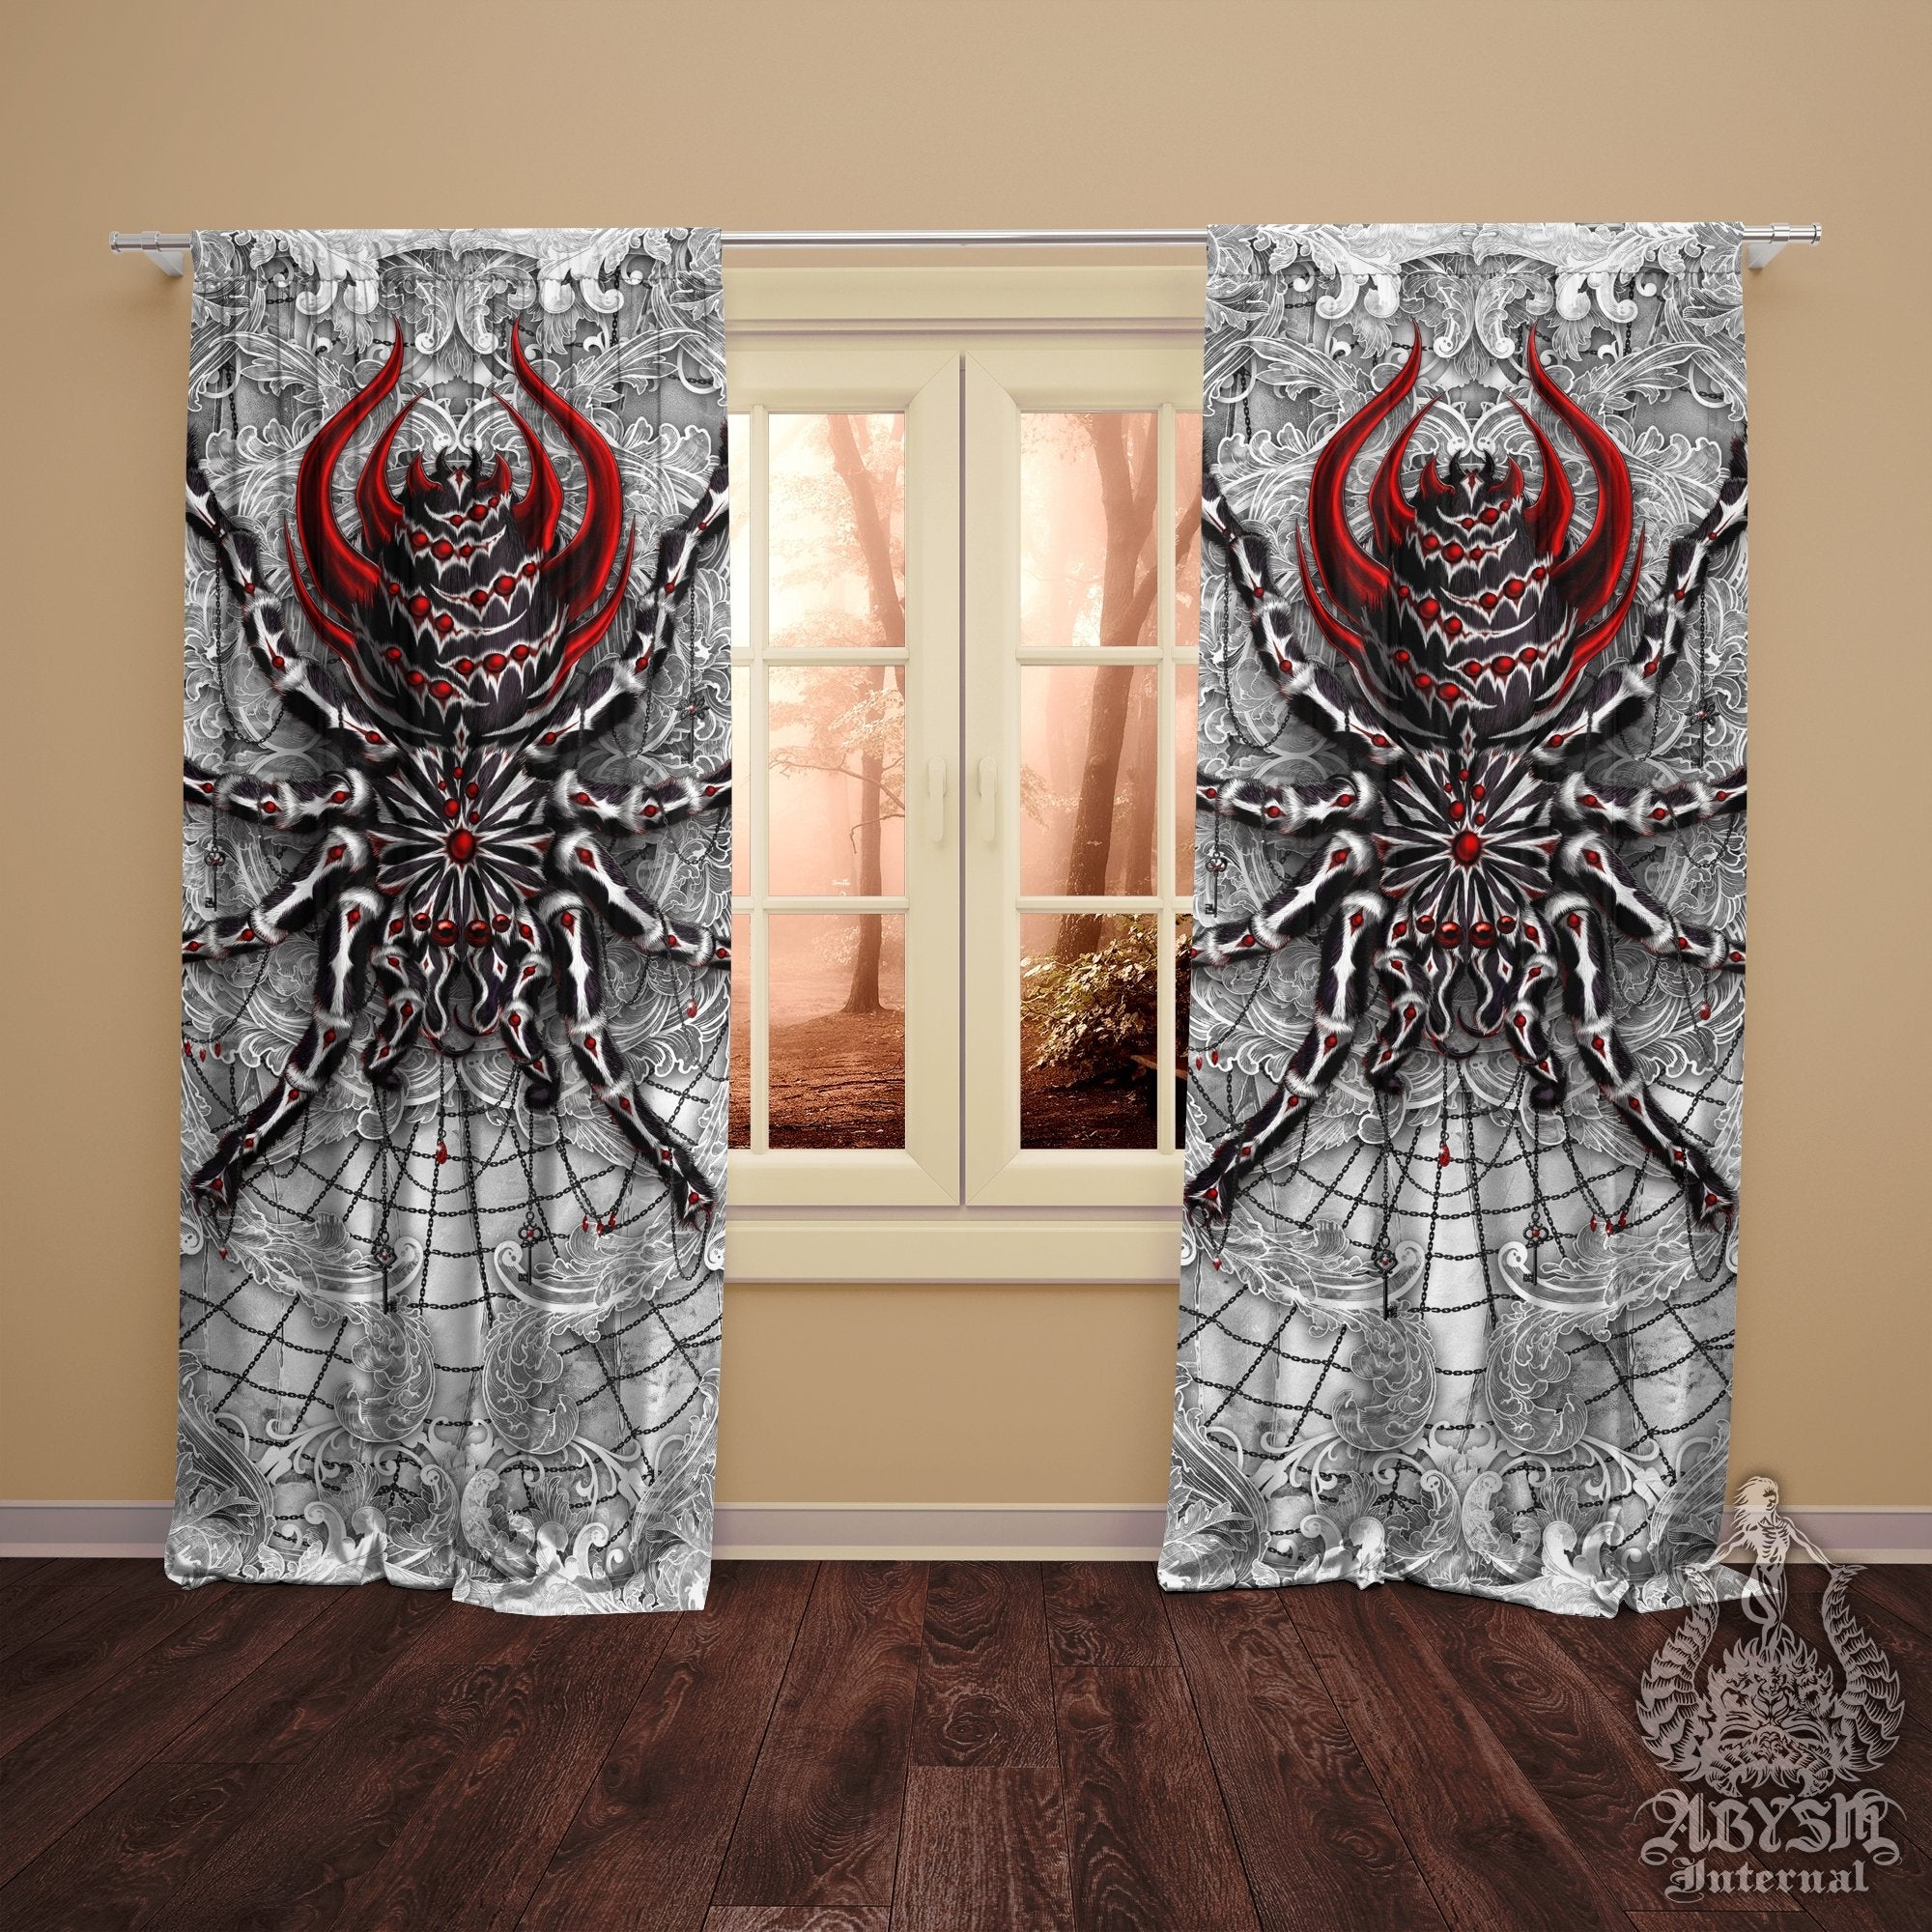 Spider Blackout Curtains, Long Window Panels, Dark Art Print, White Goth Home Decor - Tarantula, Stone Black and Red - Abysm Internal